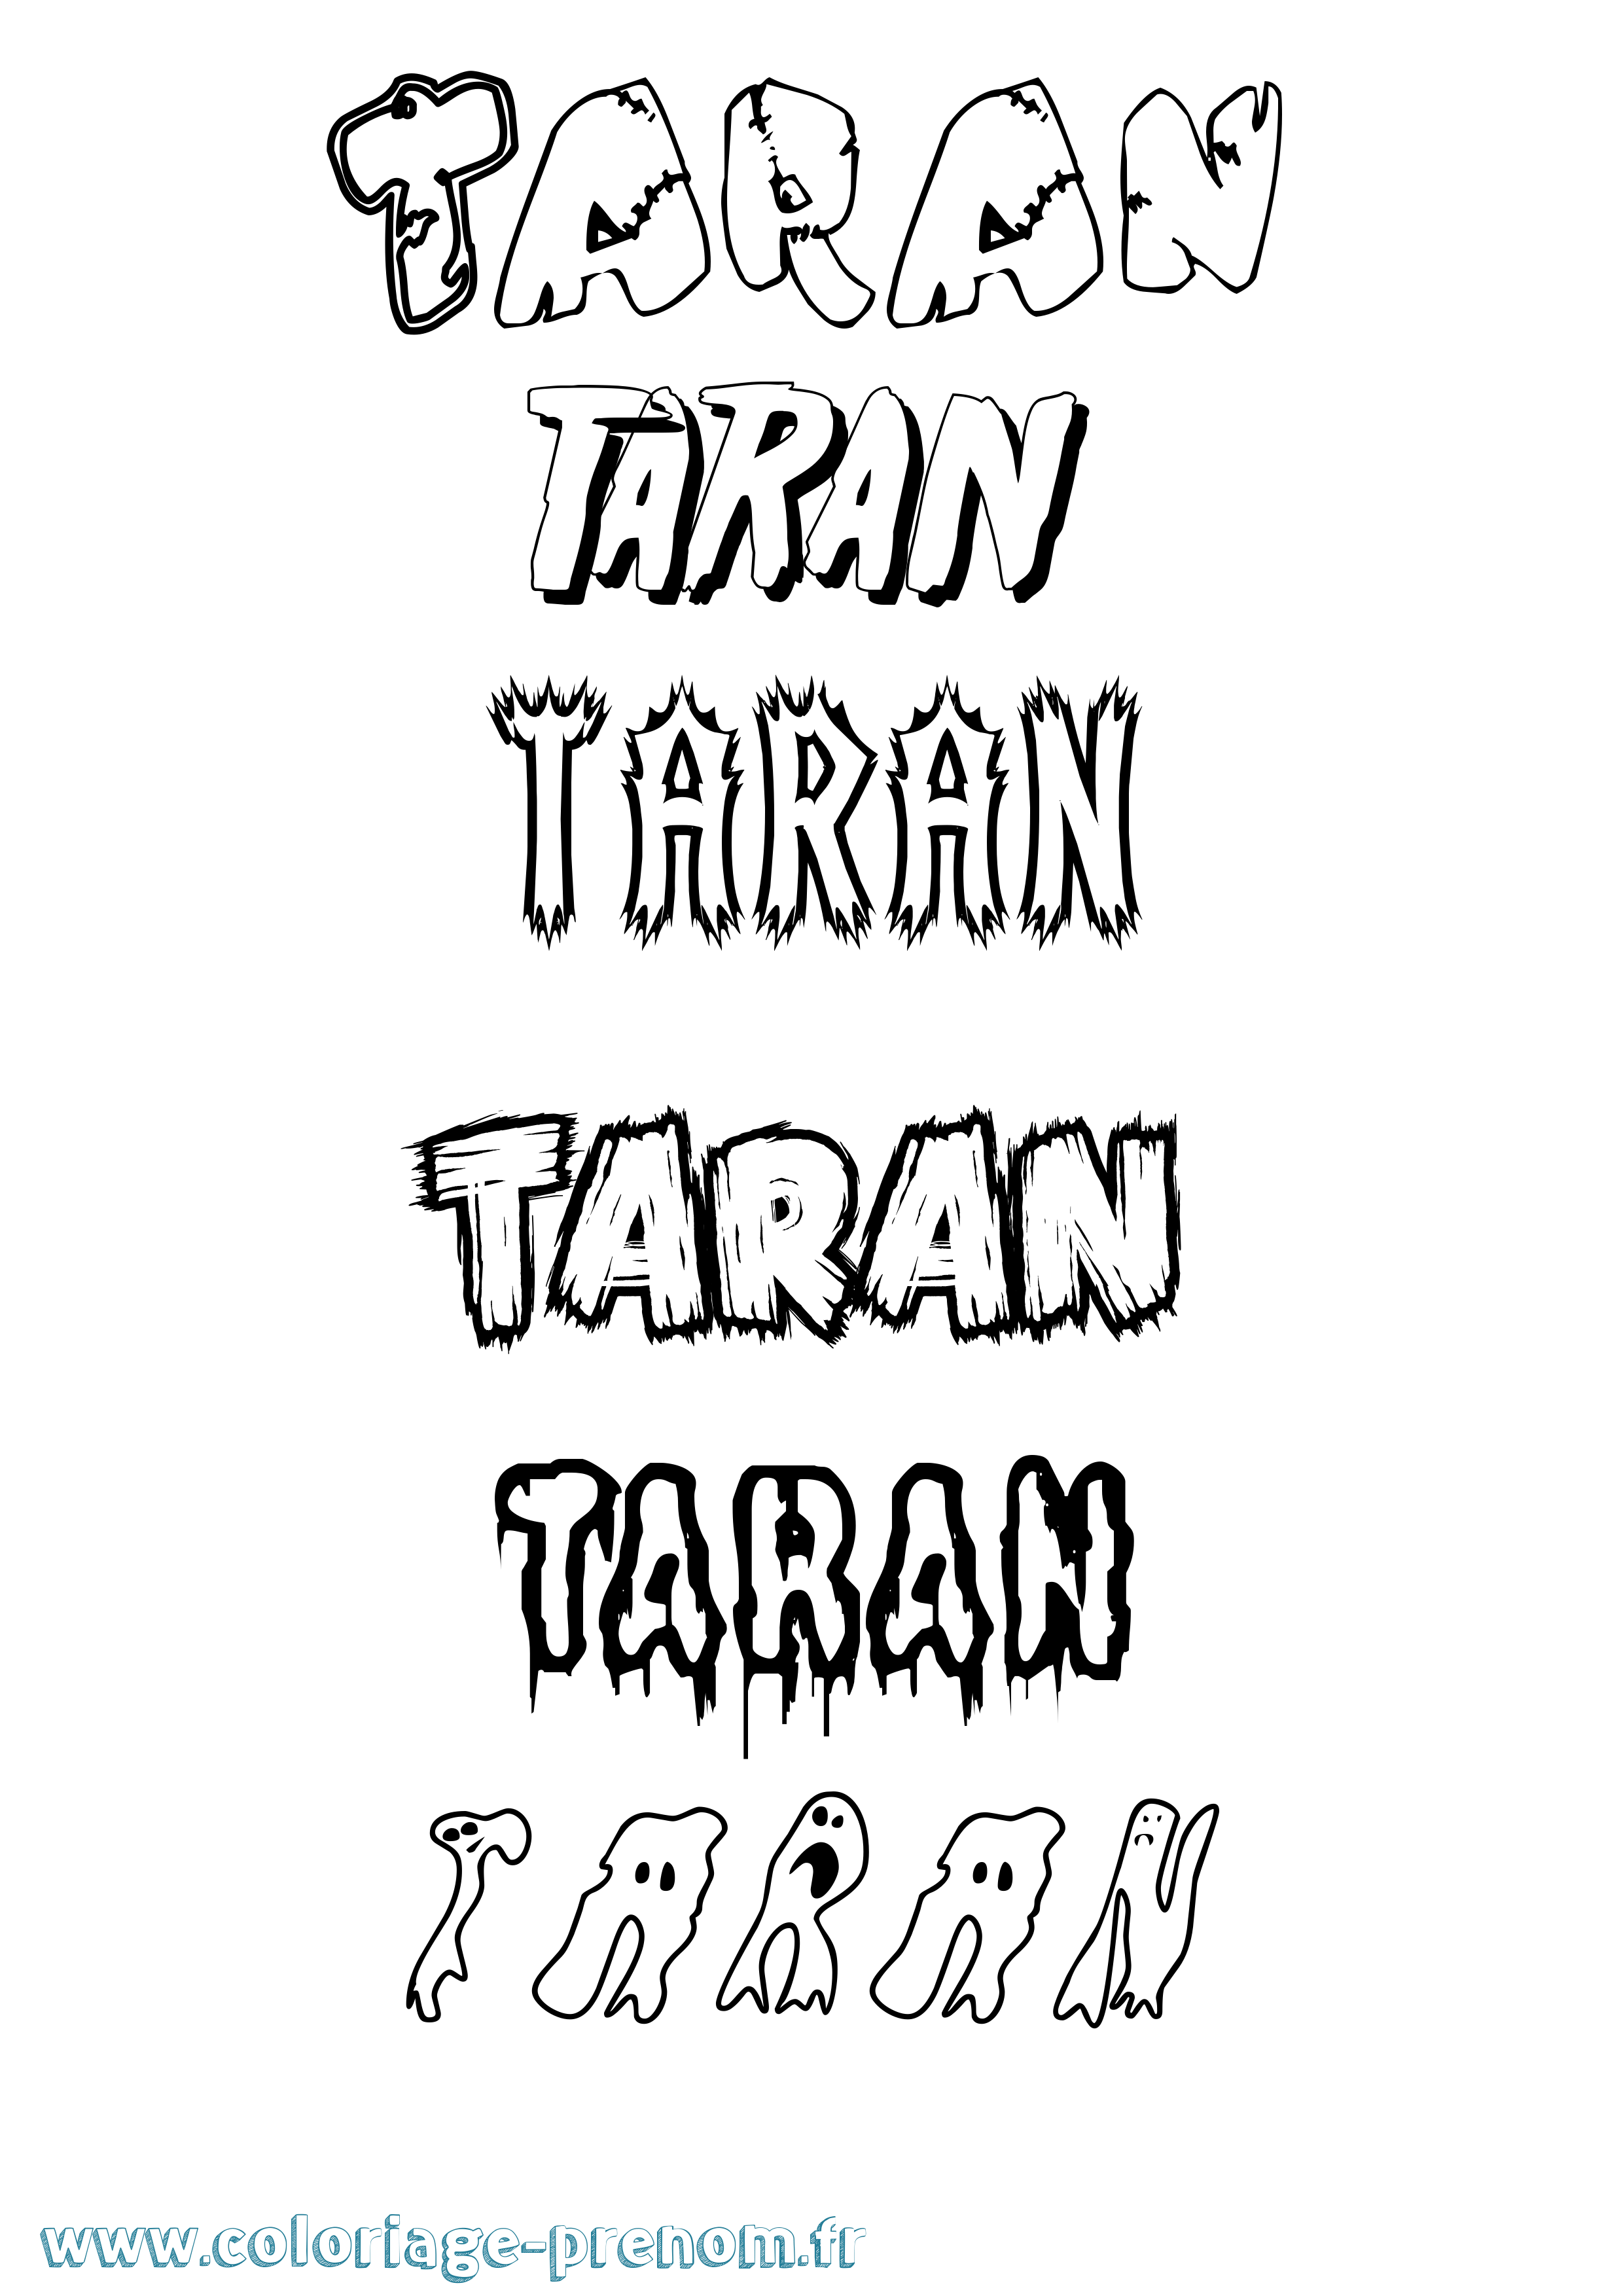 Coloriage prénom Taran Frisson